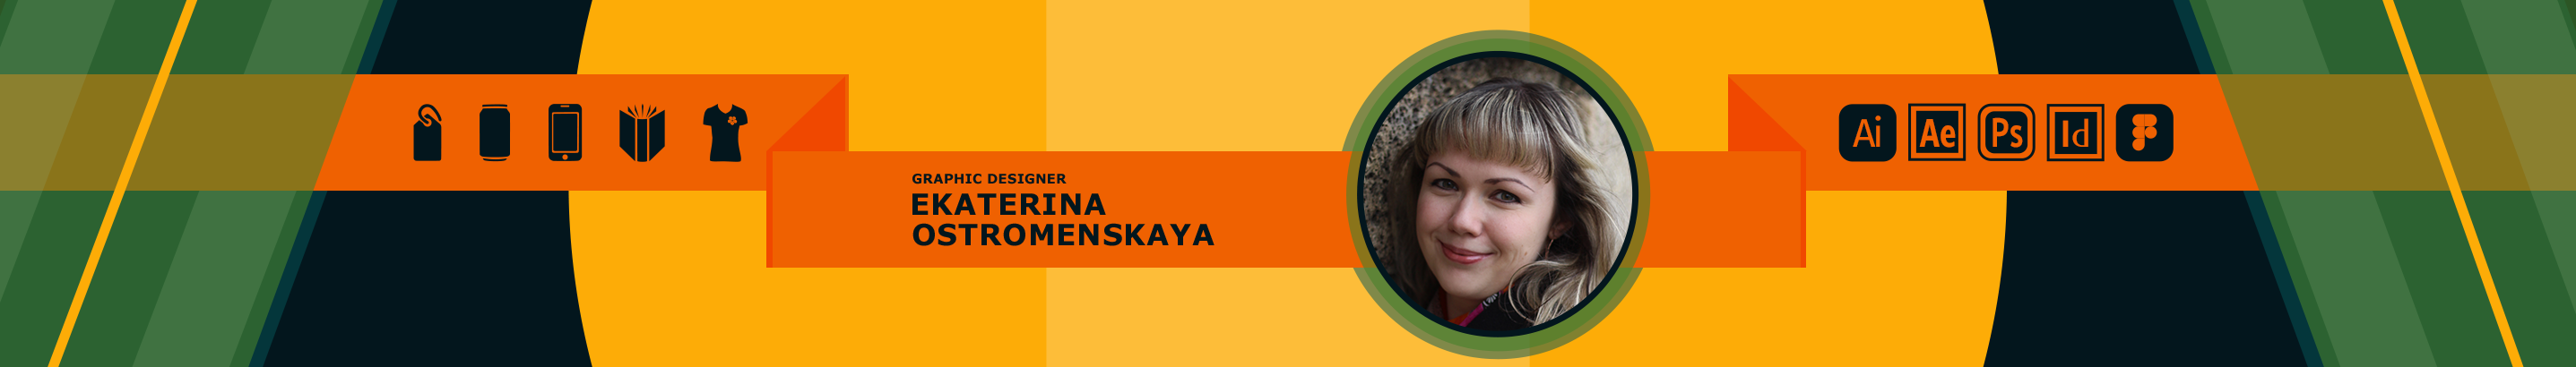 Ekaterina Ostromenskaya's profile banner